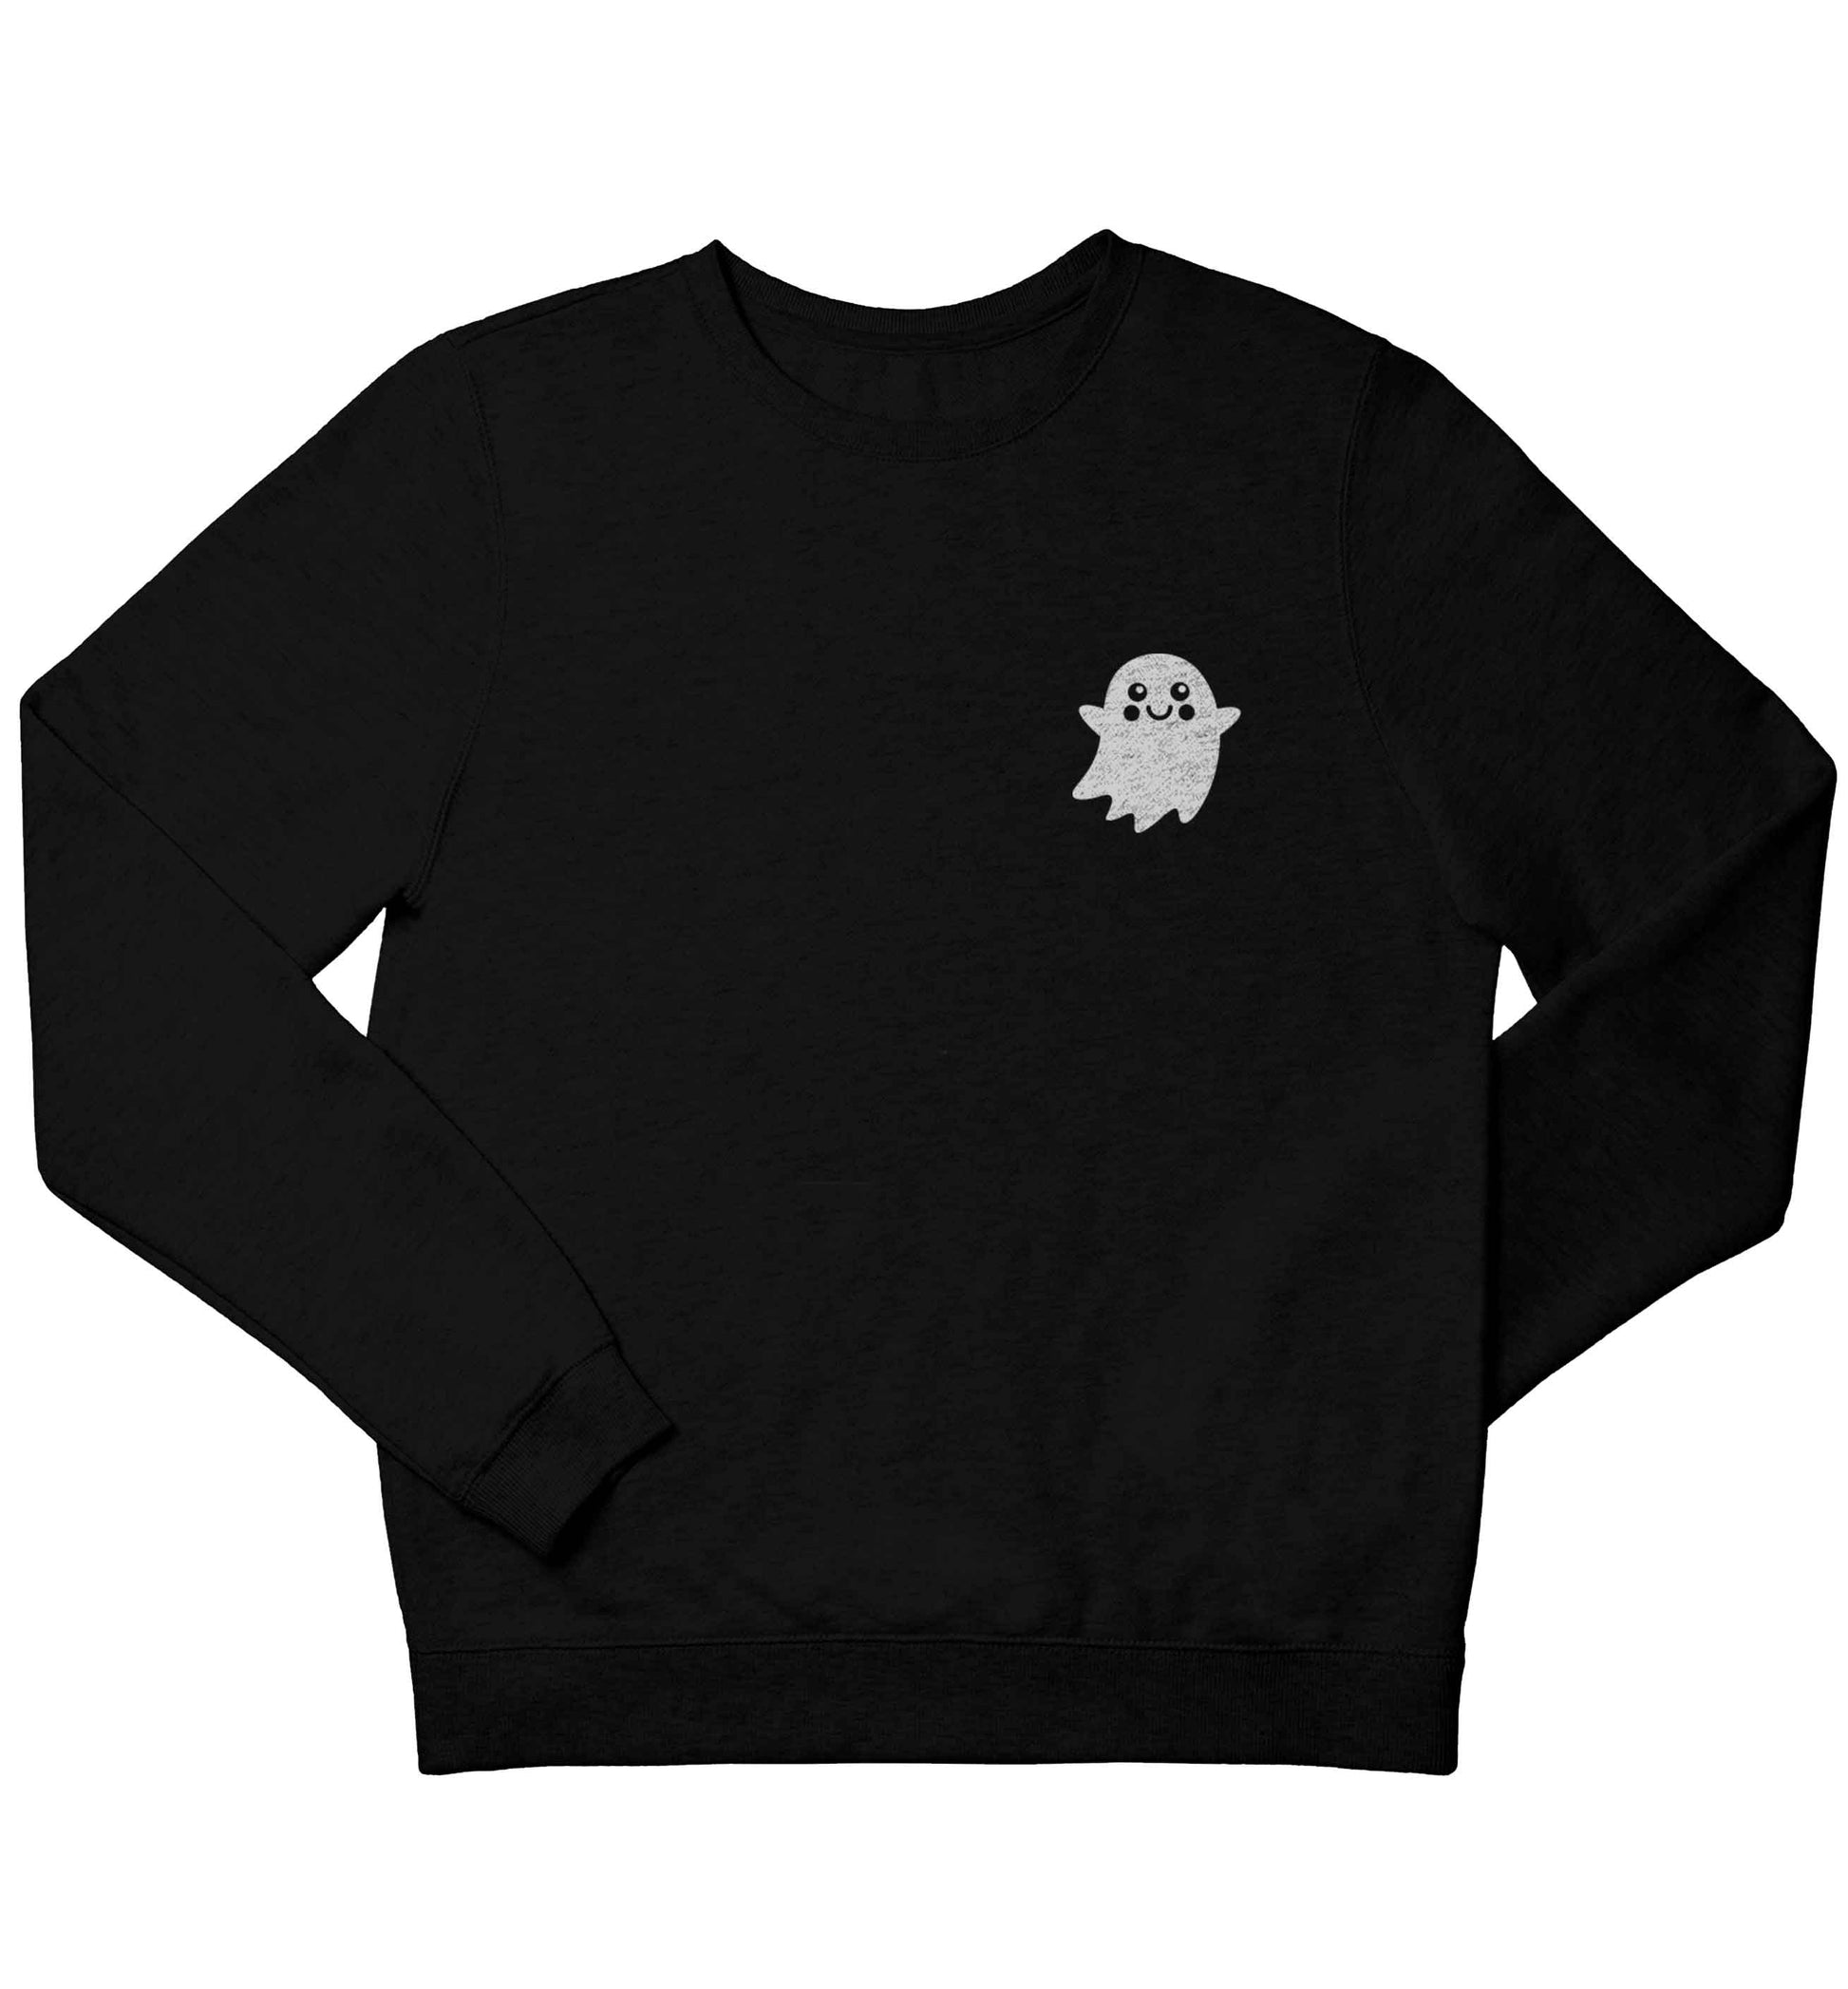 Pocket ghost children's black sweater 12-13 Years